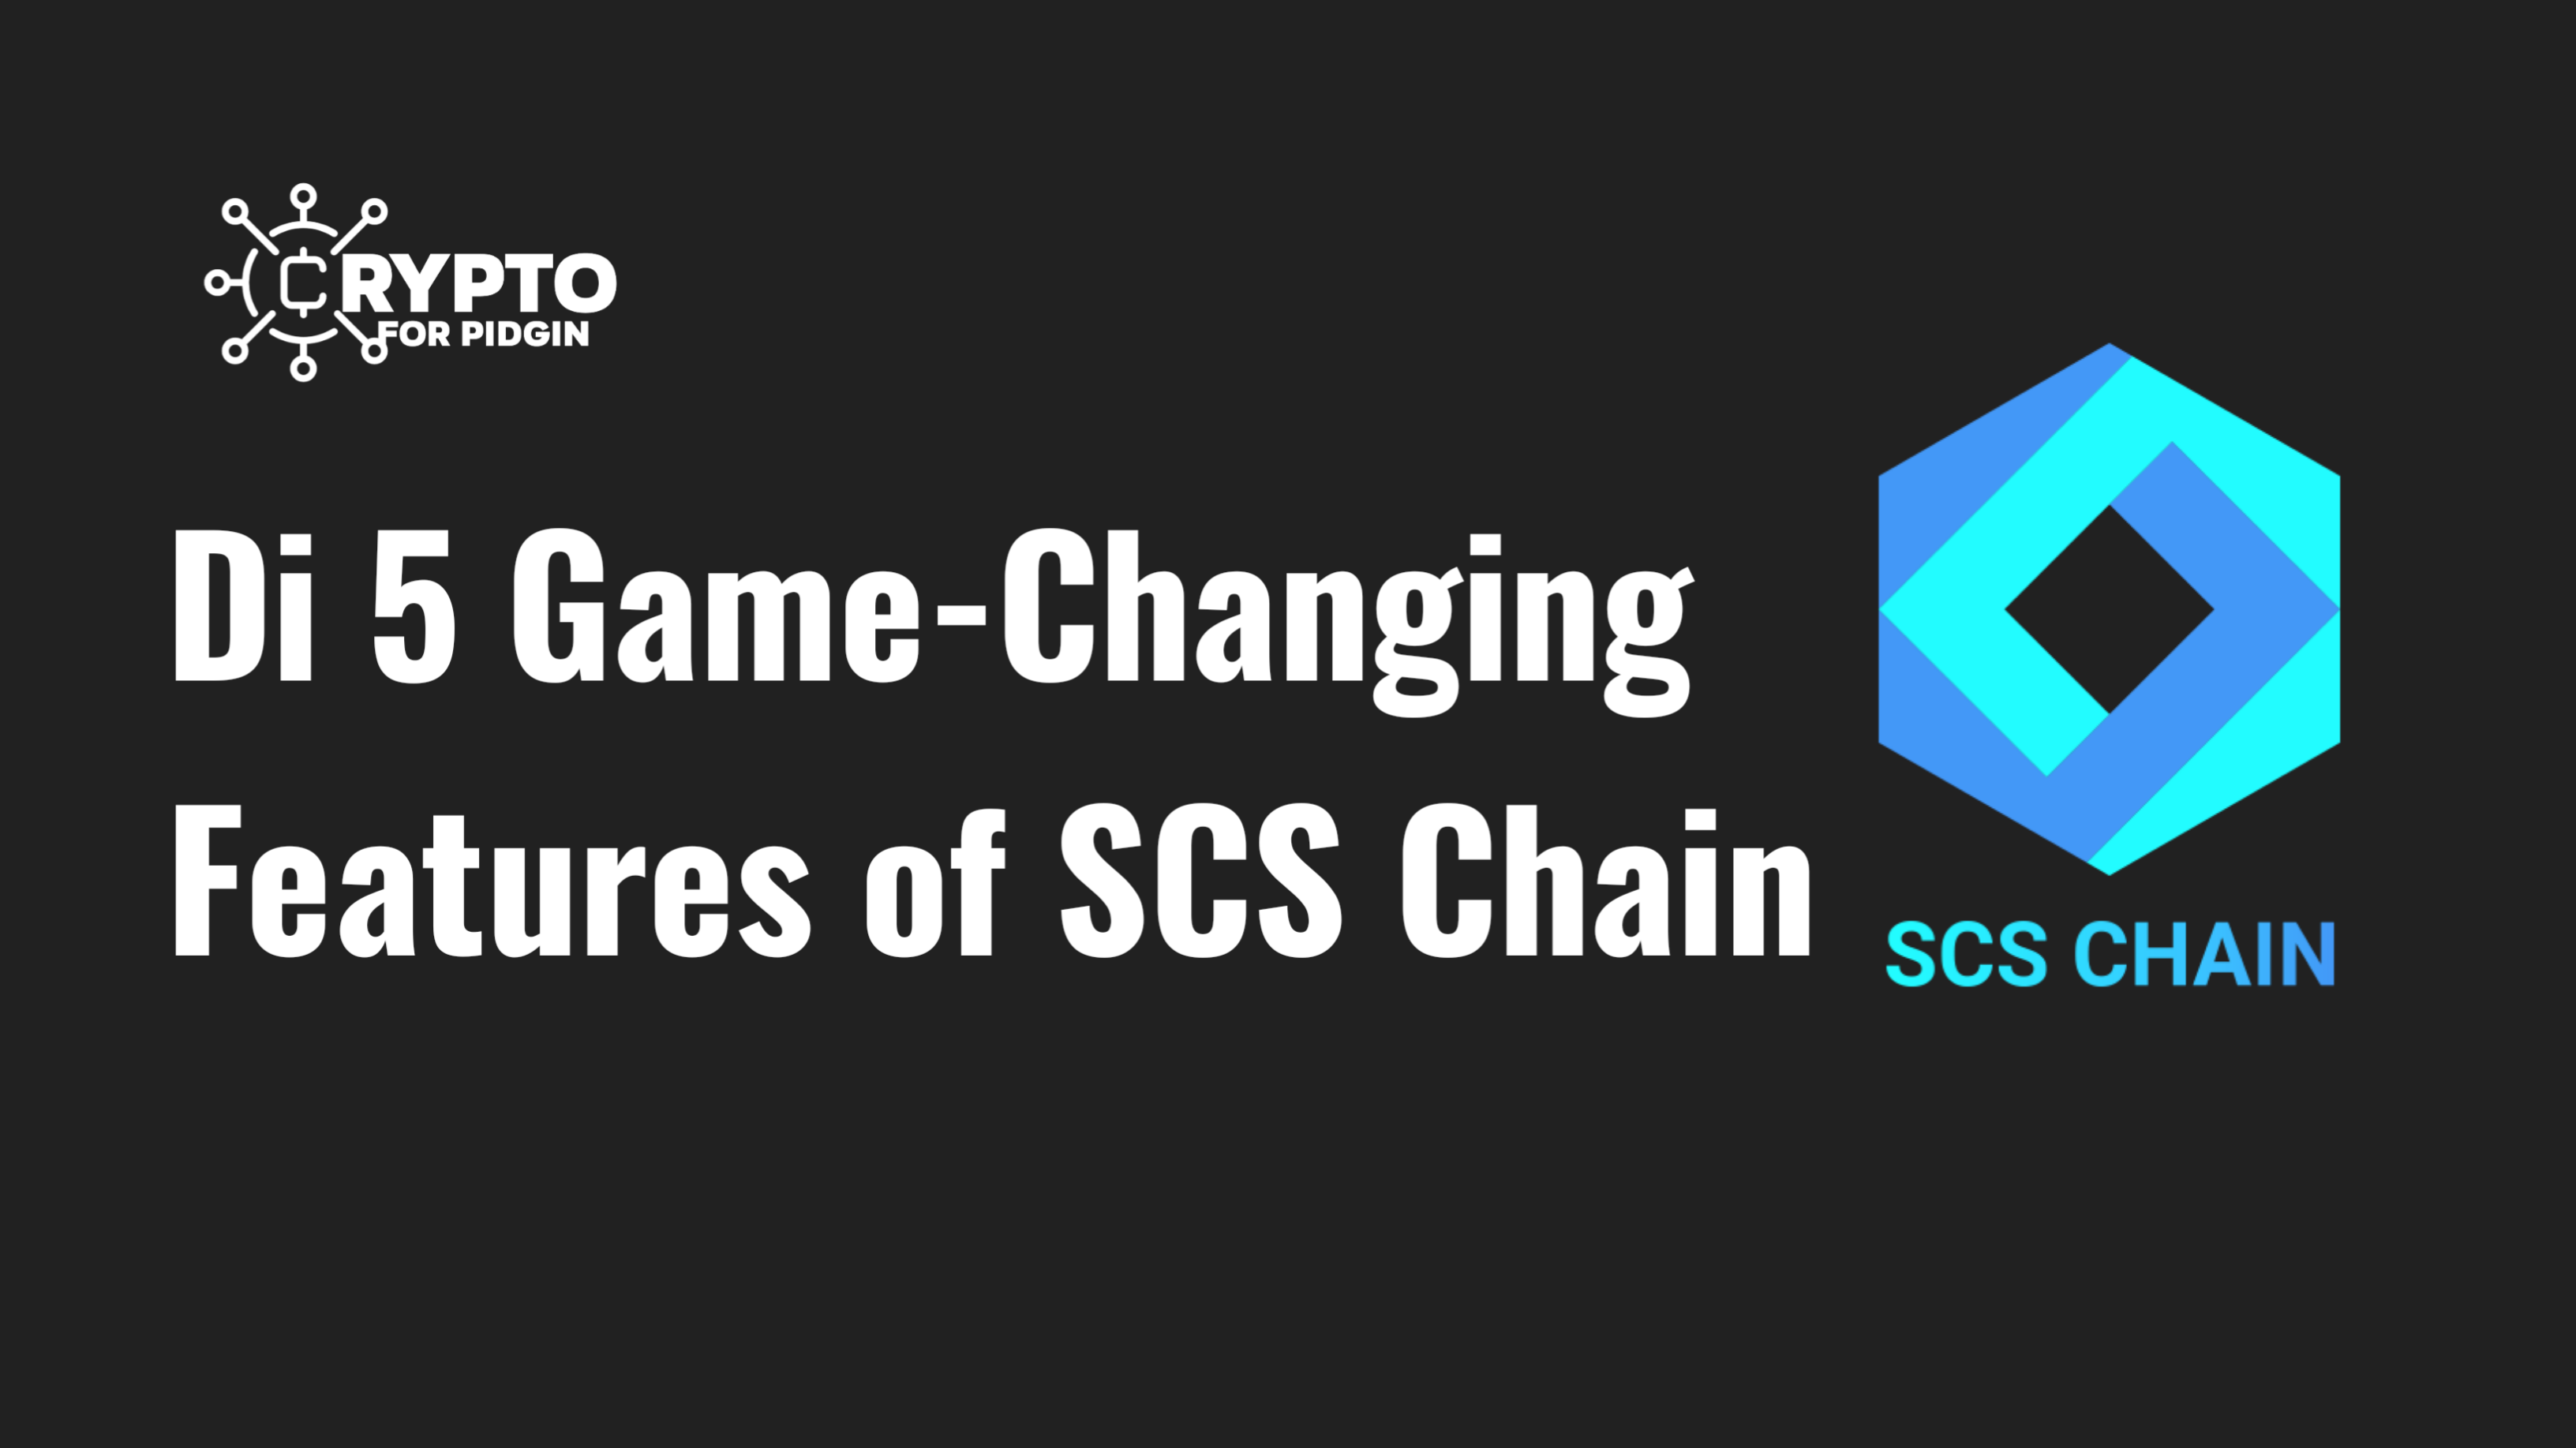 SCS Chain